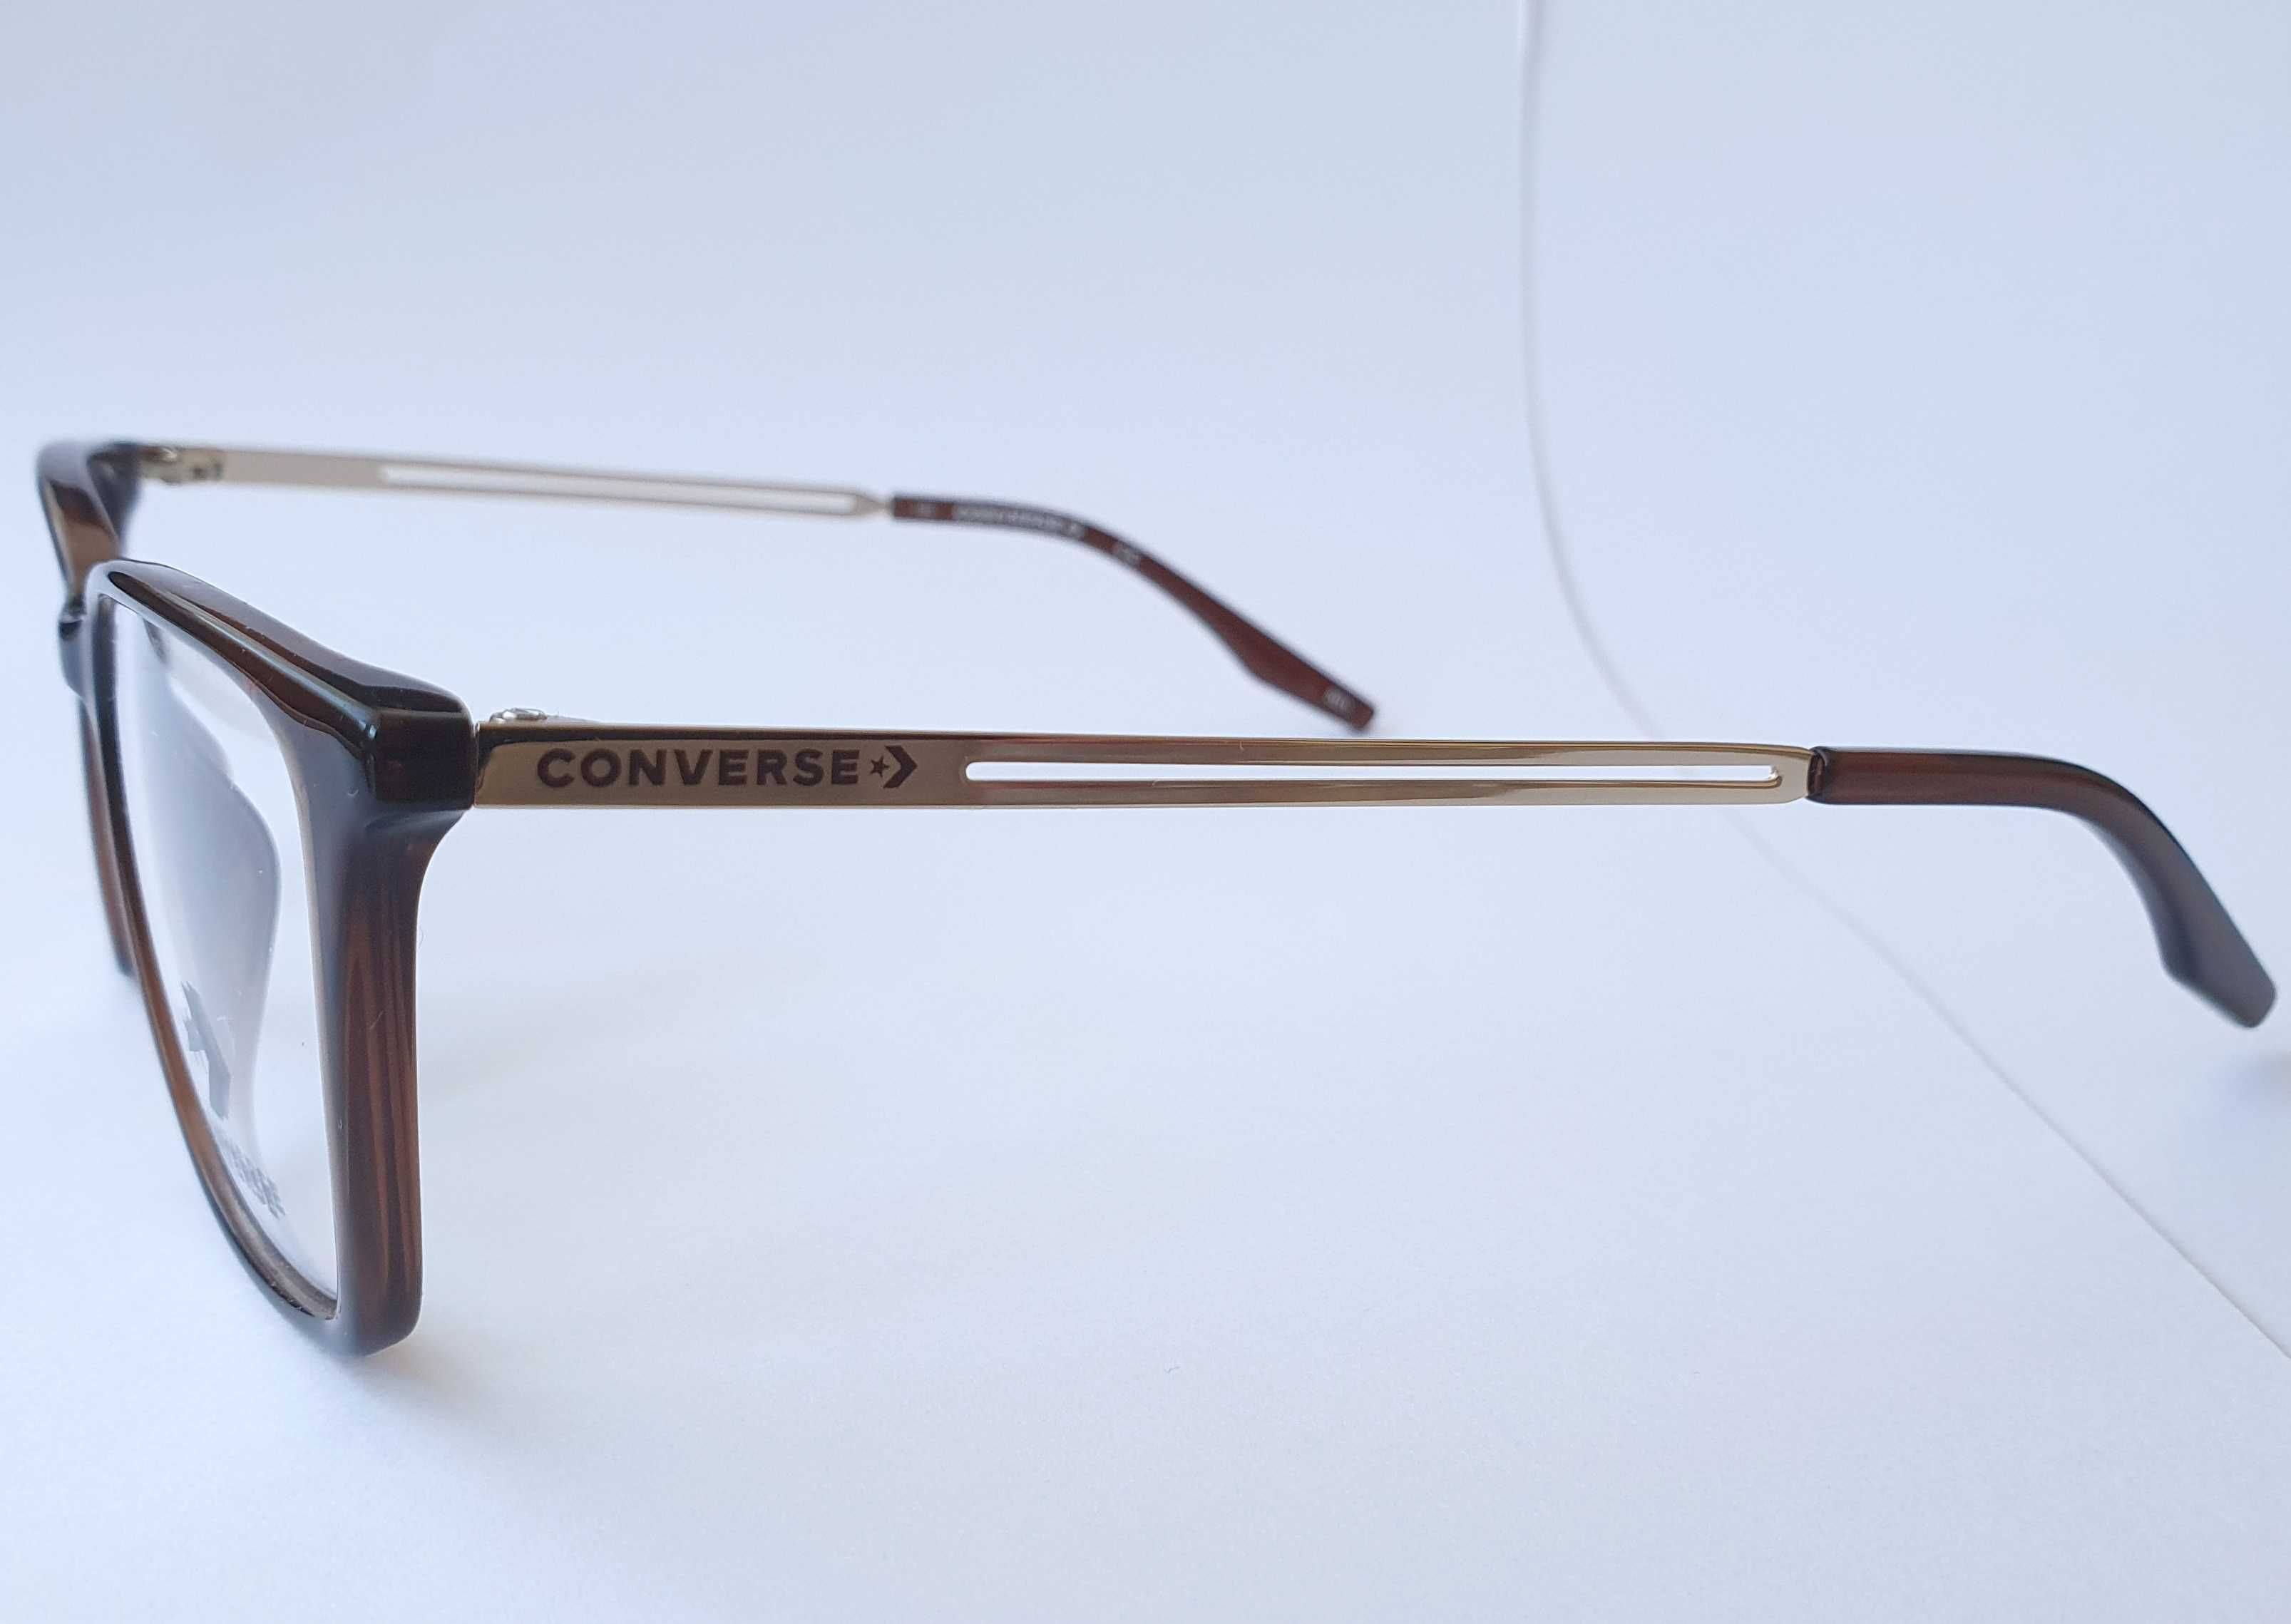 Converse CV8002 rozm. 52 17 oprawki okulary korekcyjne rb